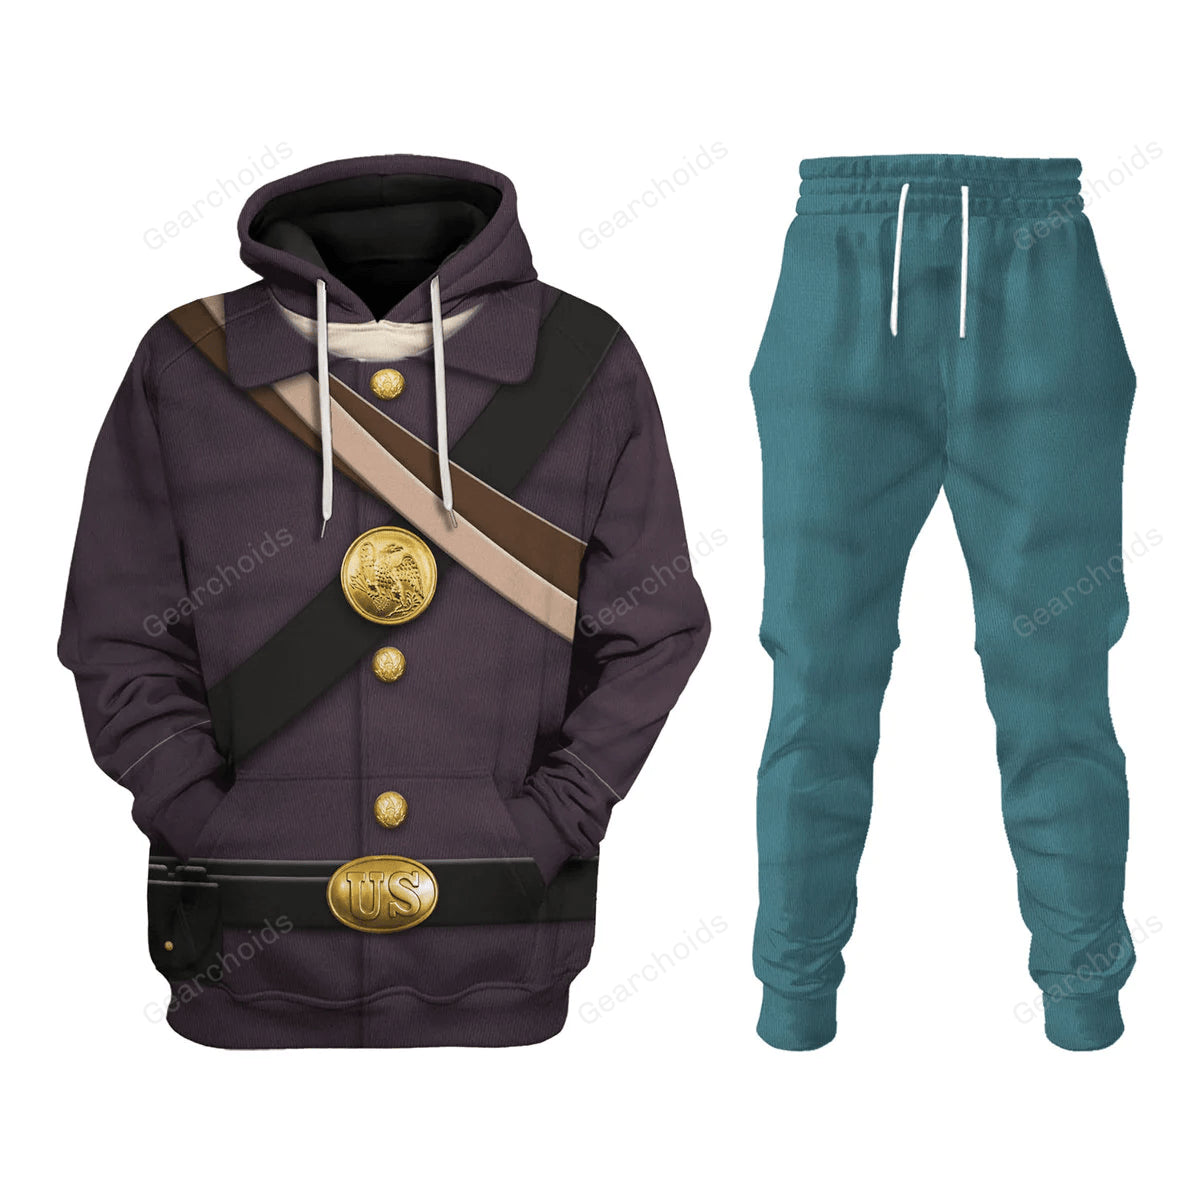 American Union Army-Infantry-Private Soldier Uniform Hoodie Sweatshirt Sweatpants